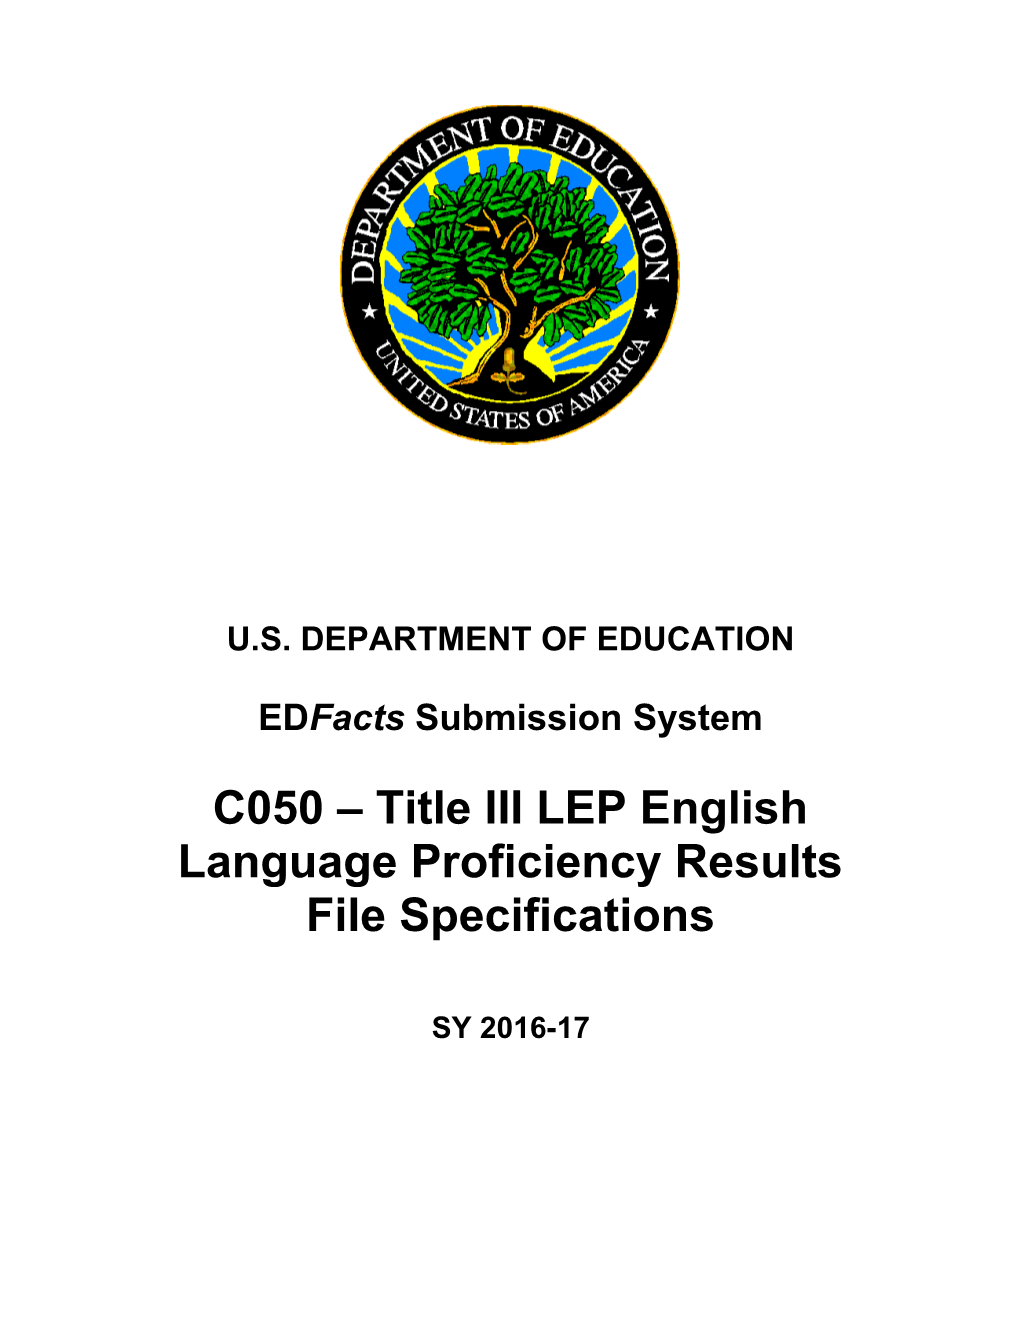 C050 Title III LEP English Language Proficiency Results (MS Word)